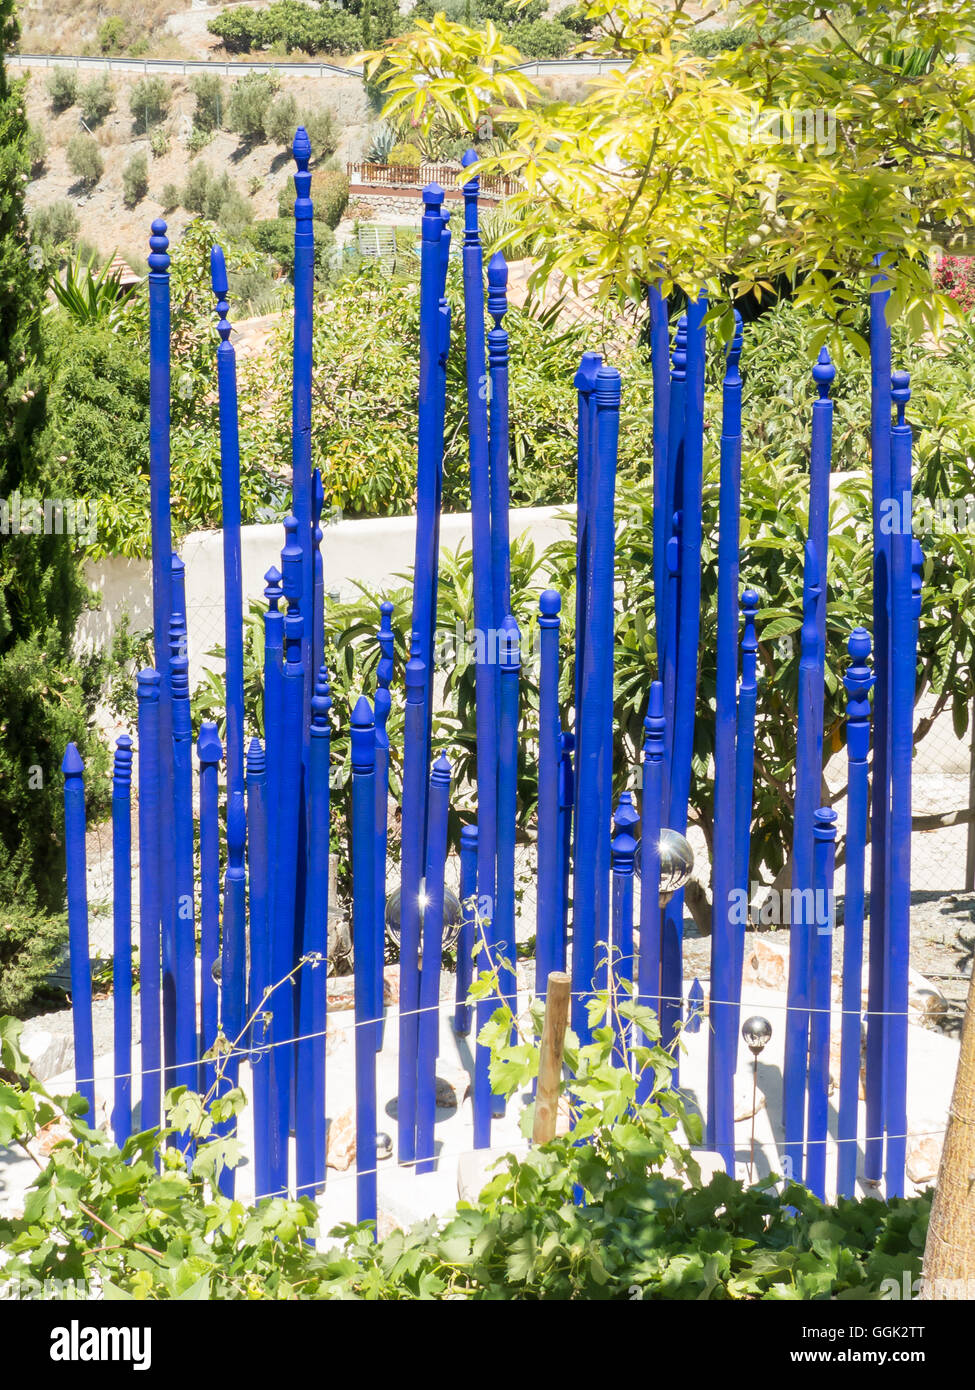 Andalucia in Spain: Kitty Harri's Sculpture Gardens in Granada province  Stock Photo - Alamy